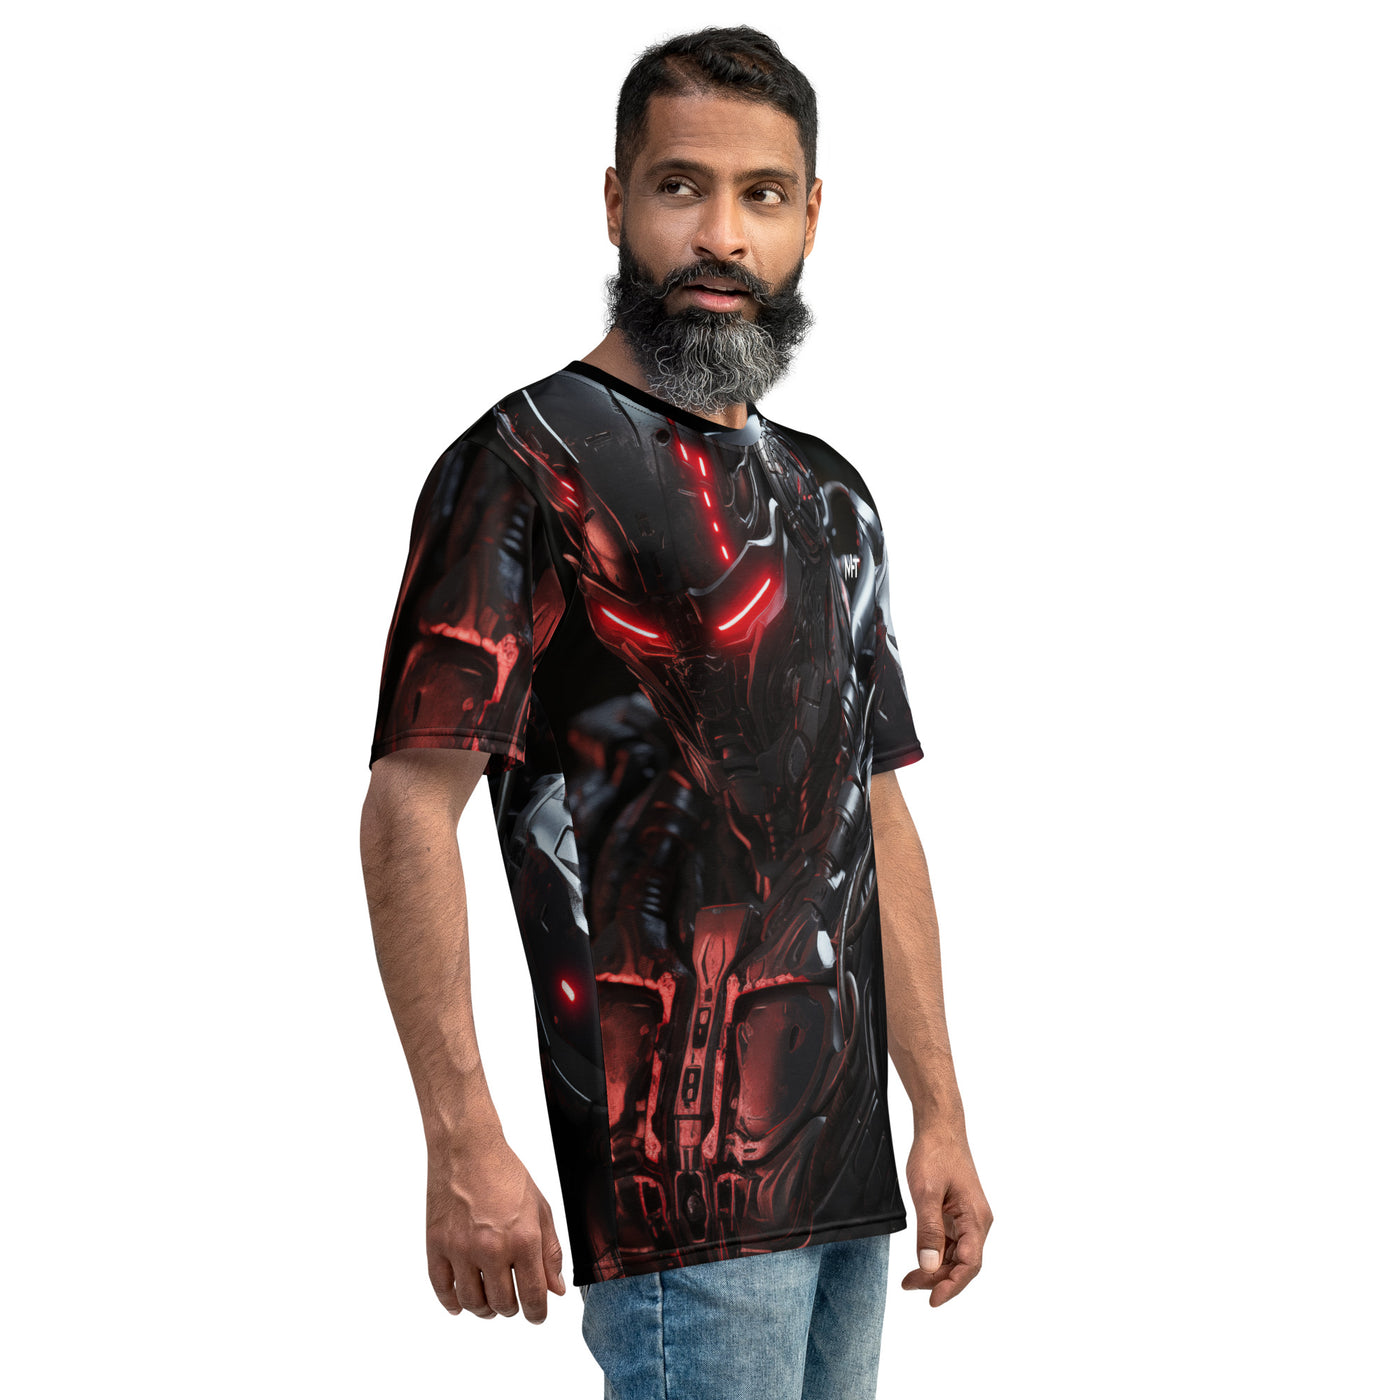 CyberArms Warrior v30 - Men's t-shirt